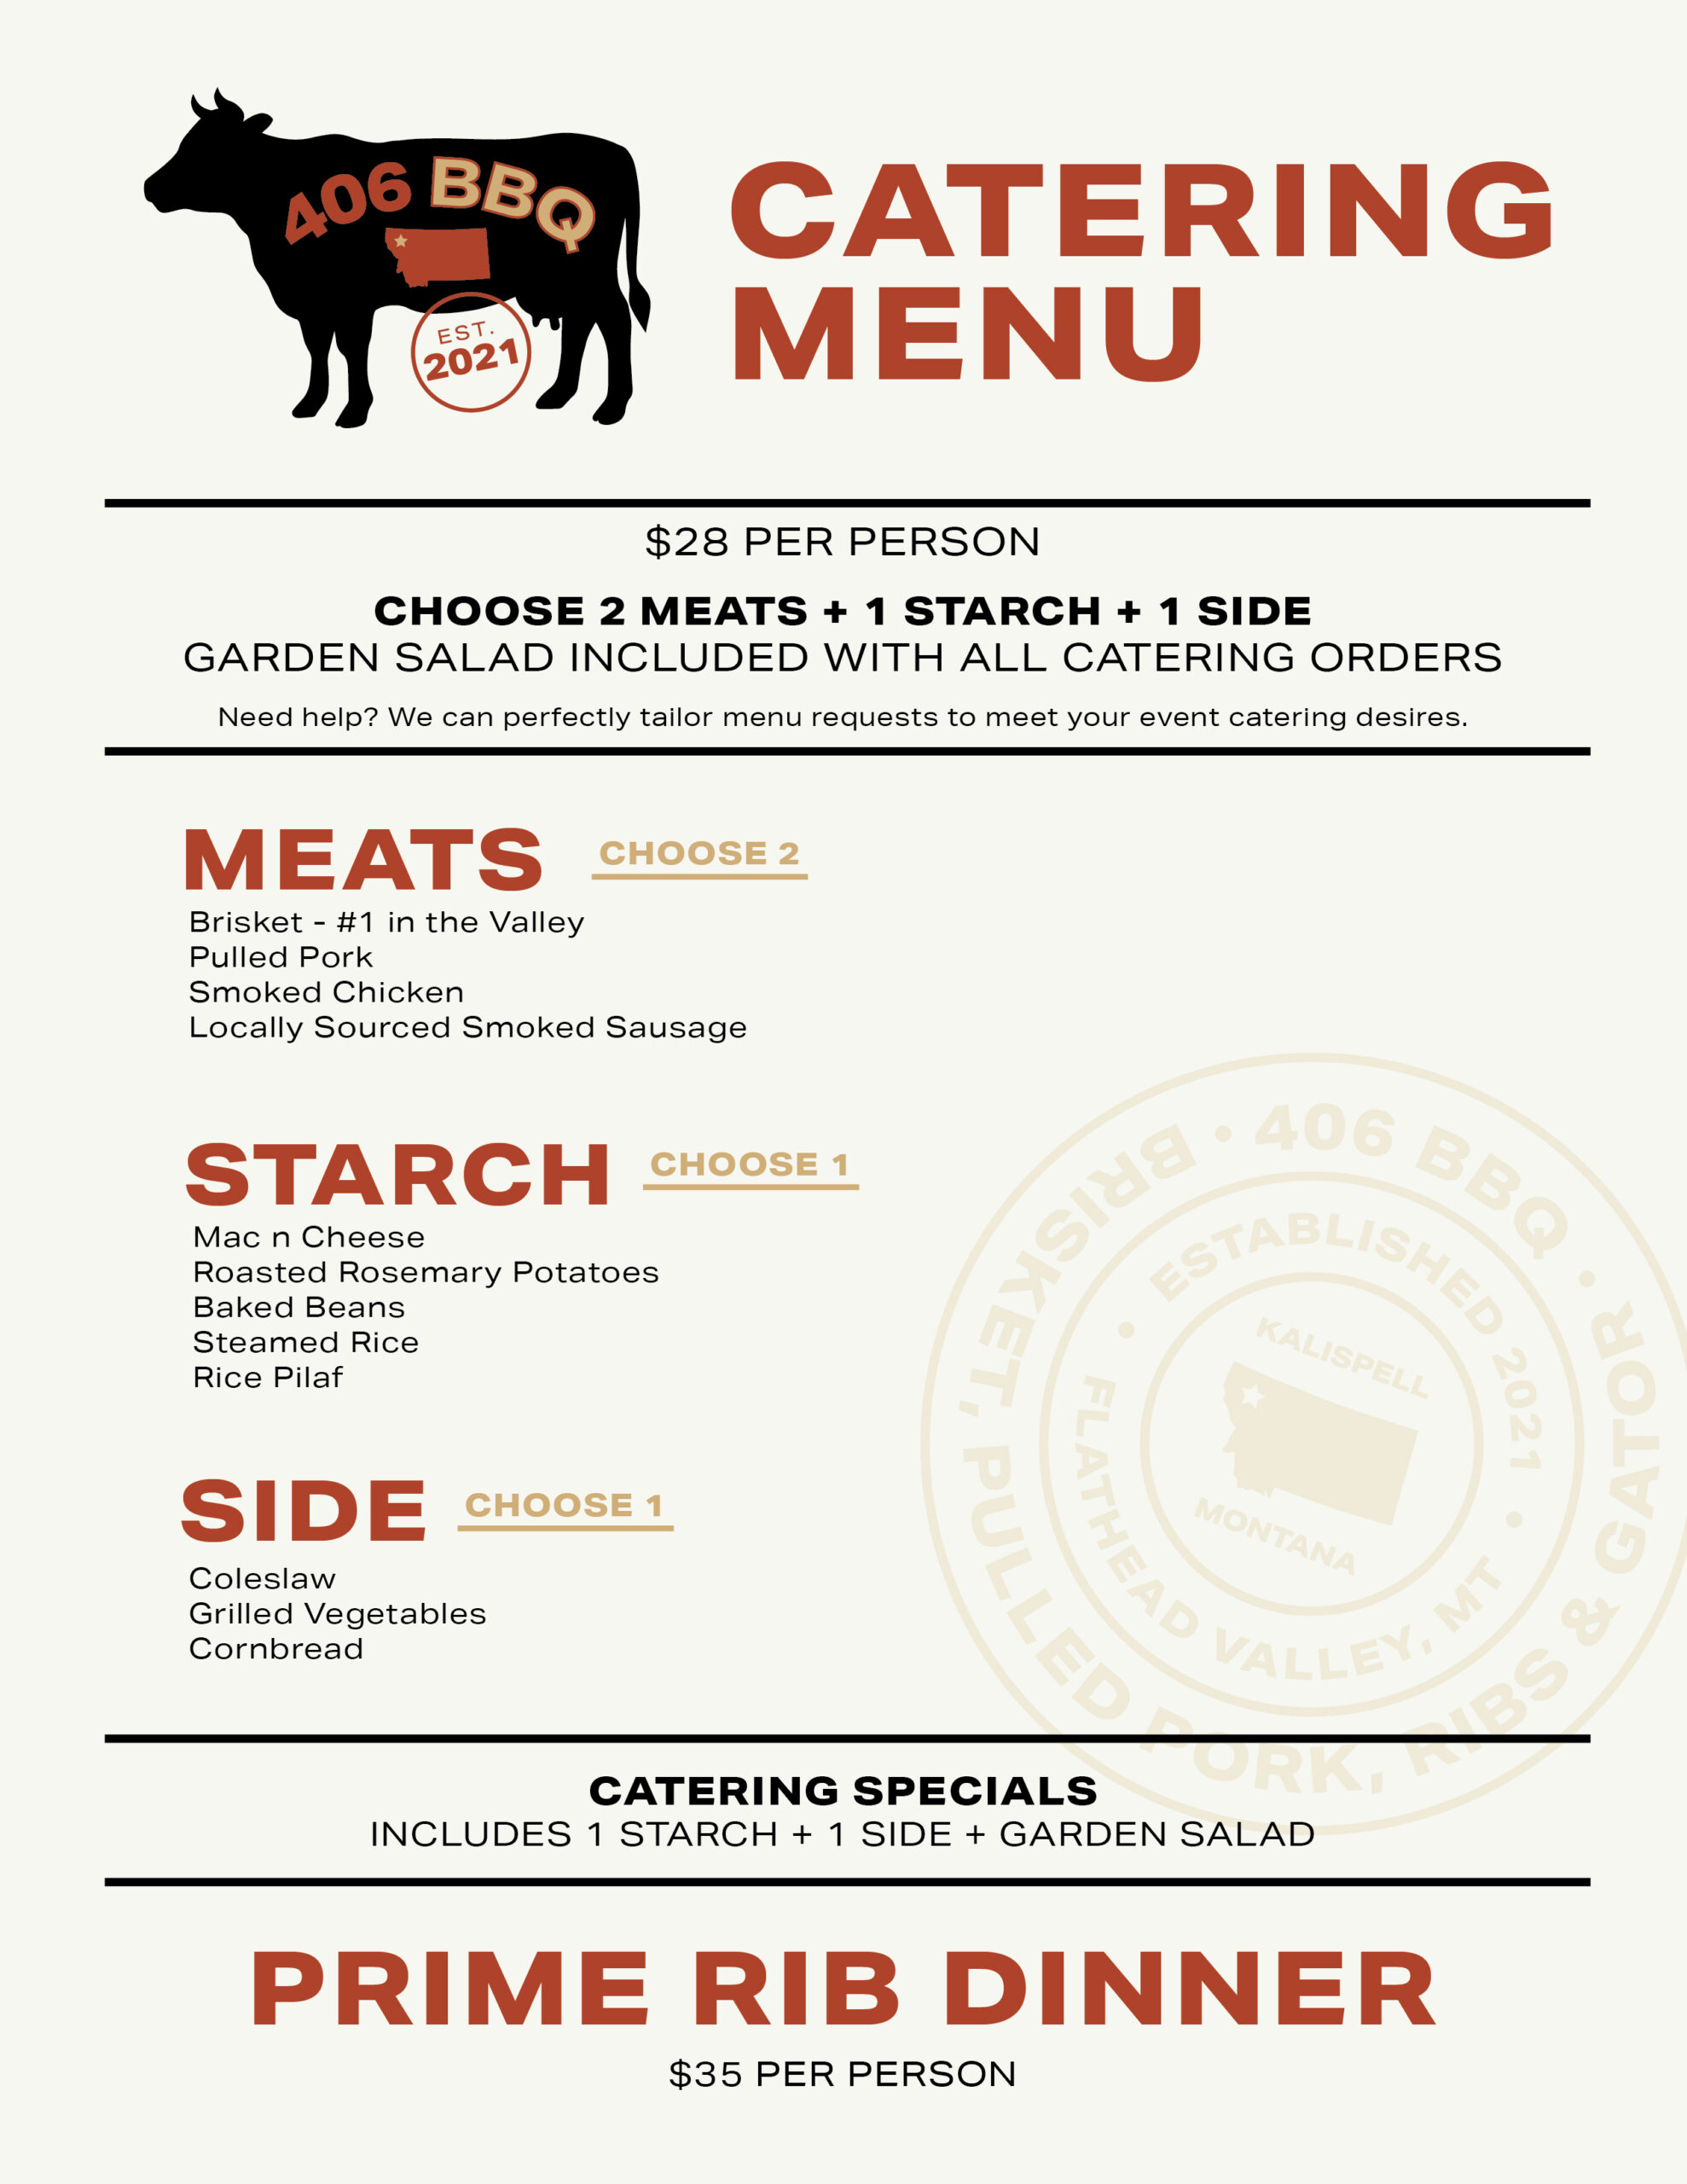 Image of 406 bbq catering menu